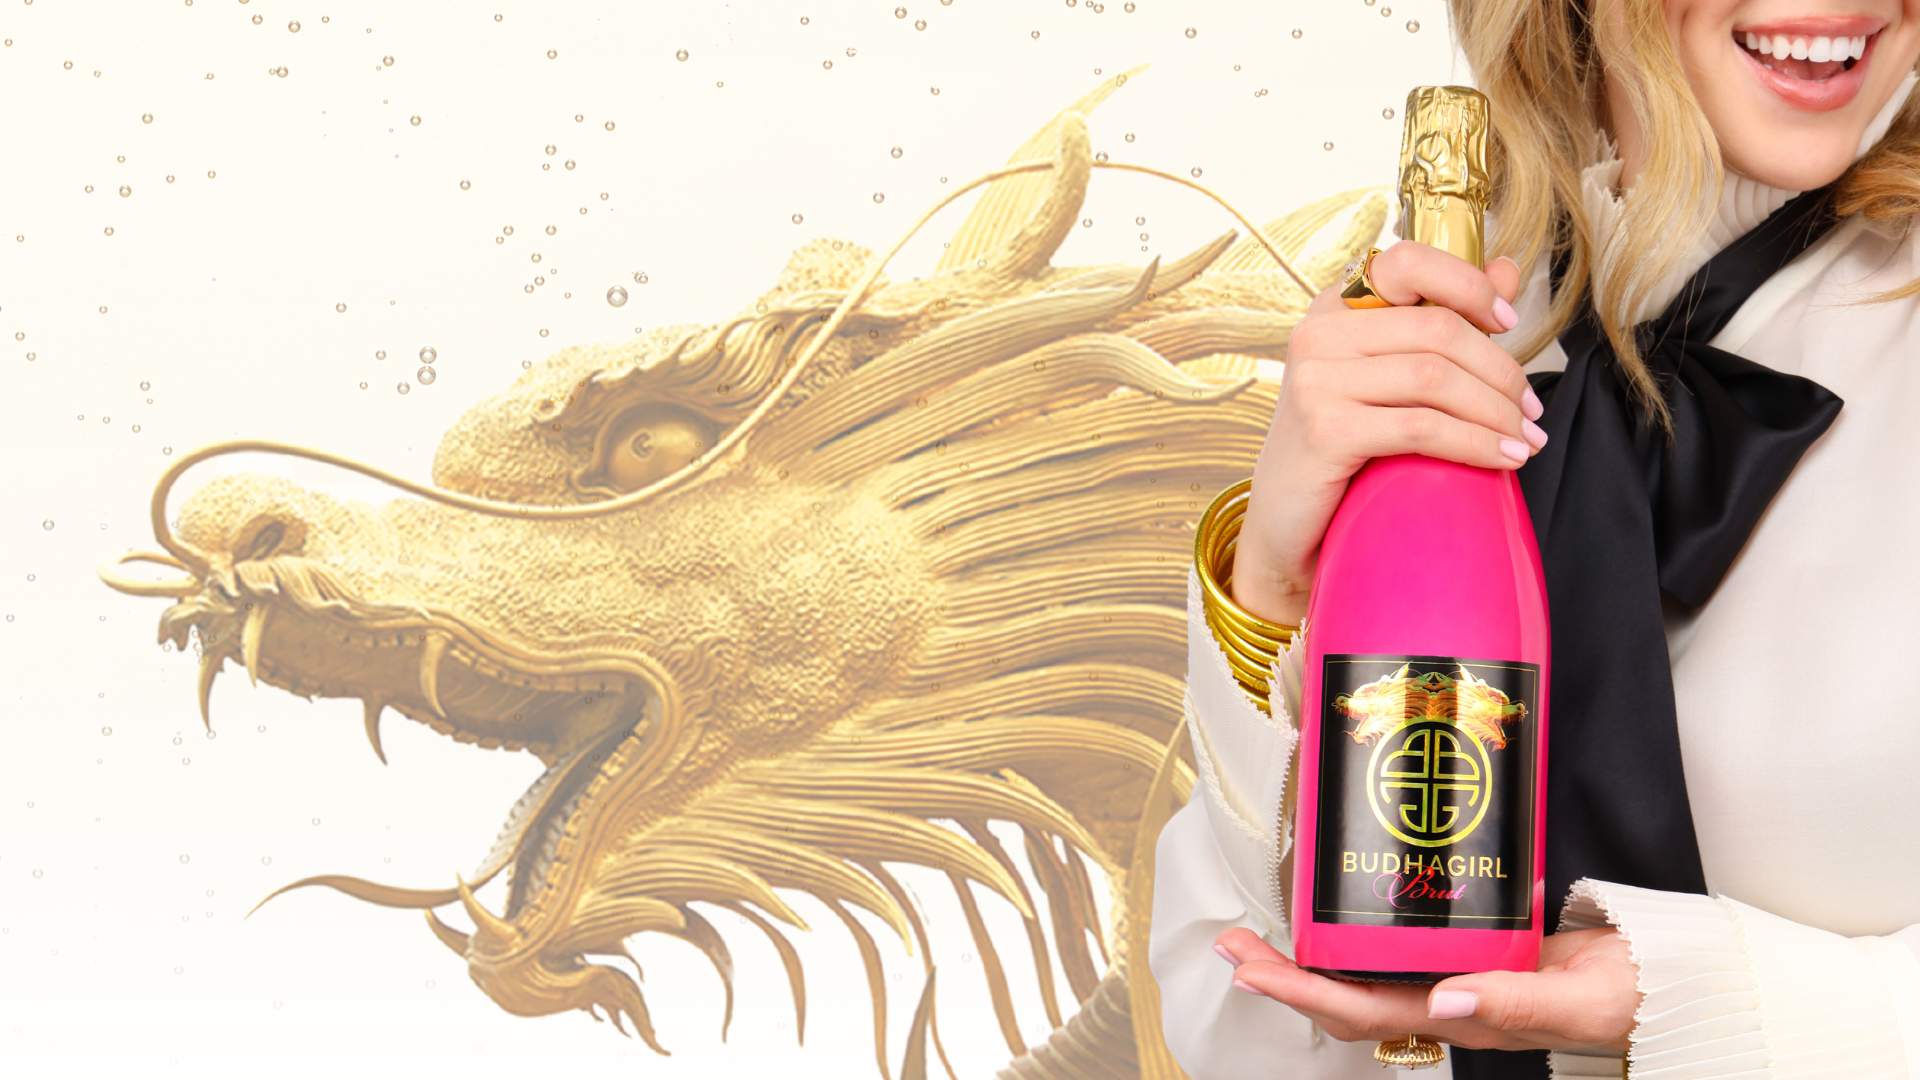 Model Wearing Gold All Weather Bangle Bracelets While Holding a Sparkling Brut Bottle | BuDhaGirl Sparkling Wines